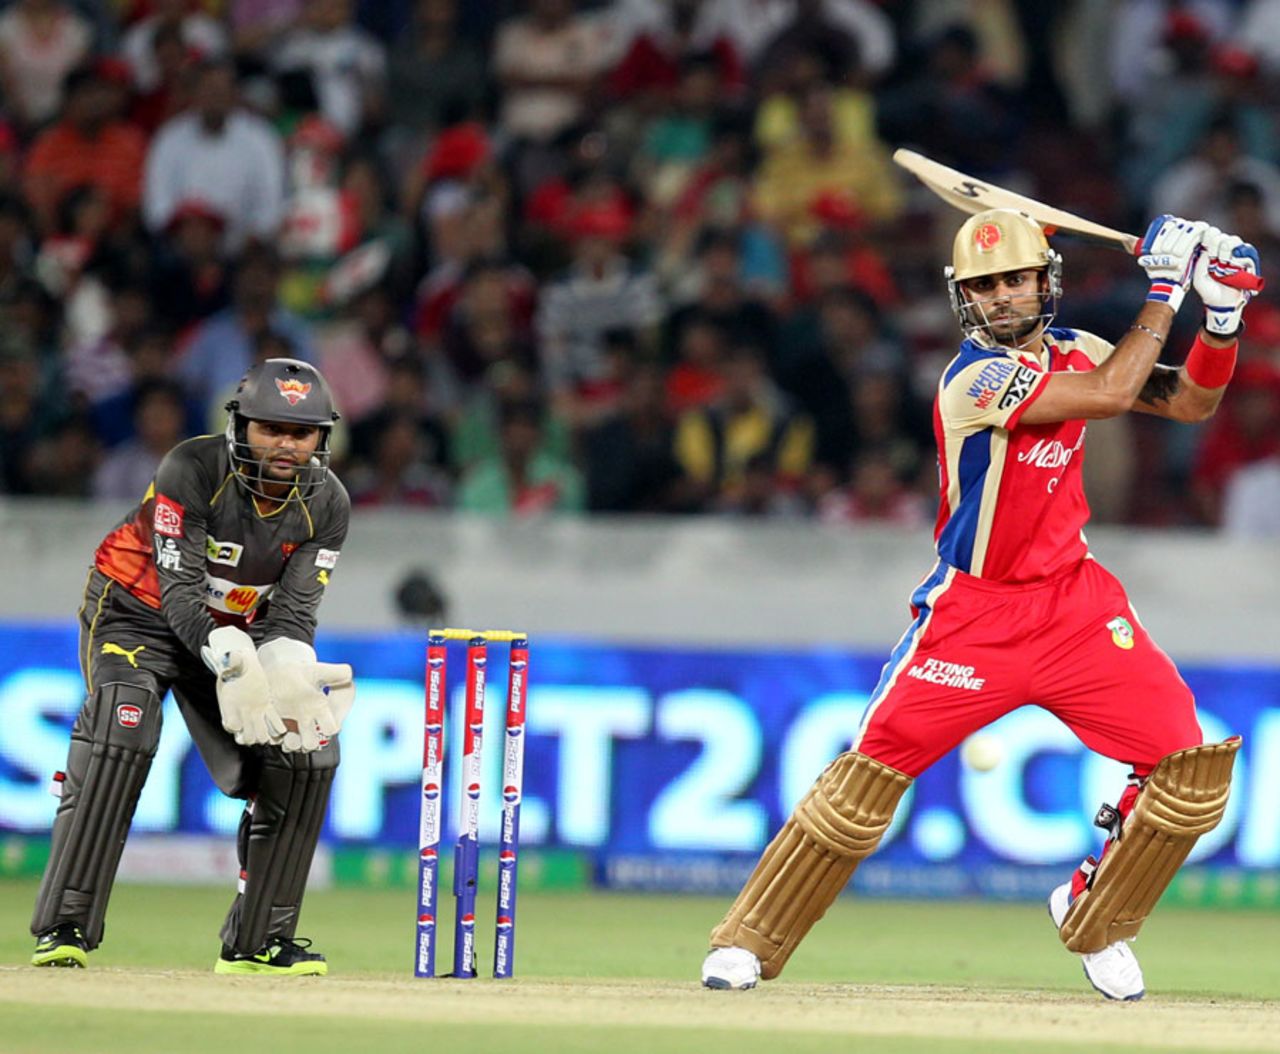 Virat Kohli hits square, Sunrisers Hyderabad v Royal Challengers Bangalore, IPL, Hyderabad, April 7, 2013